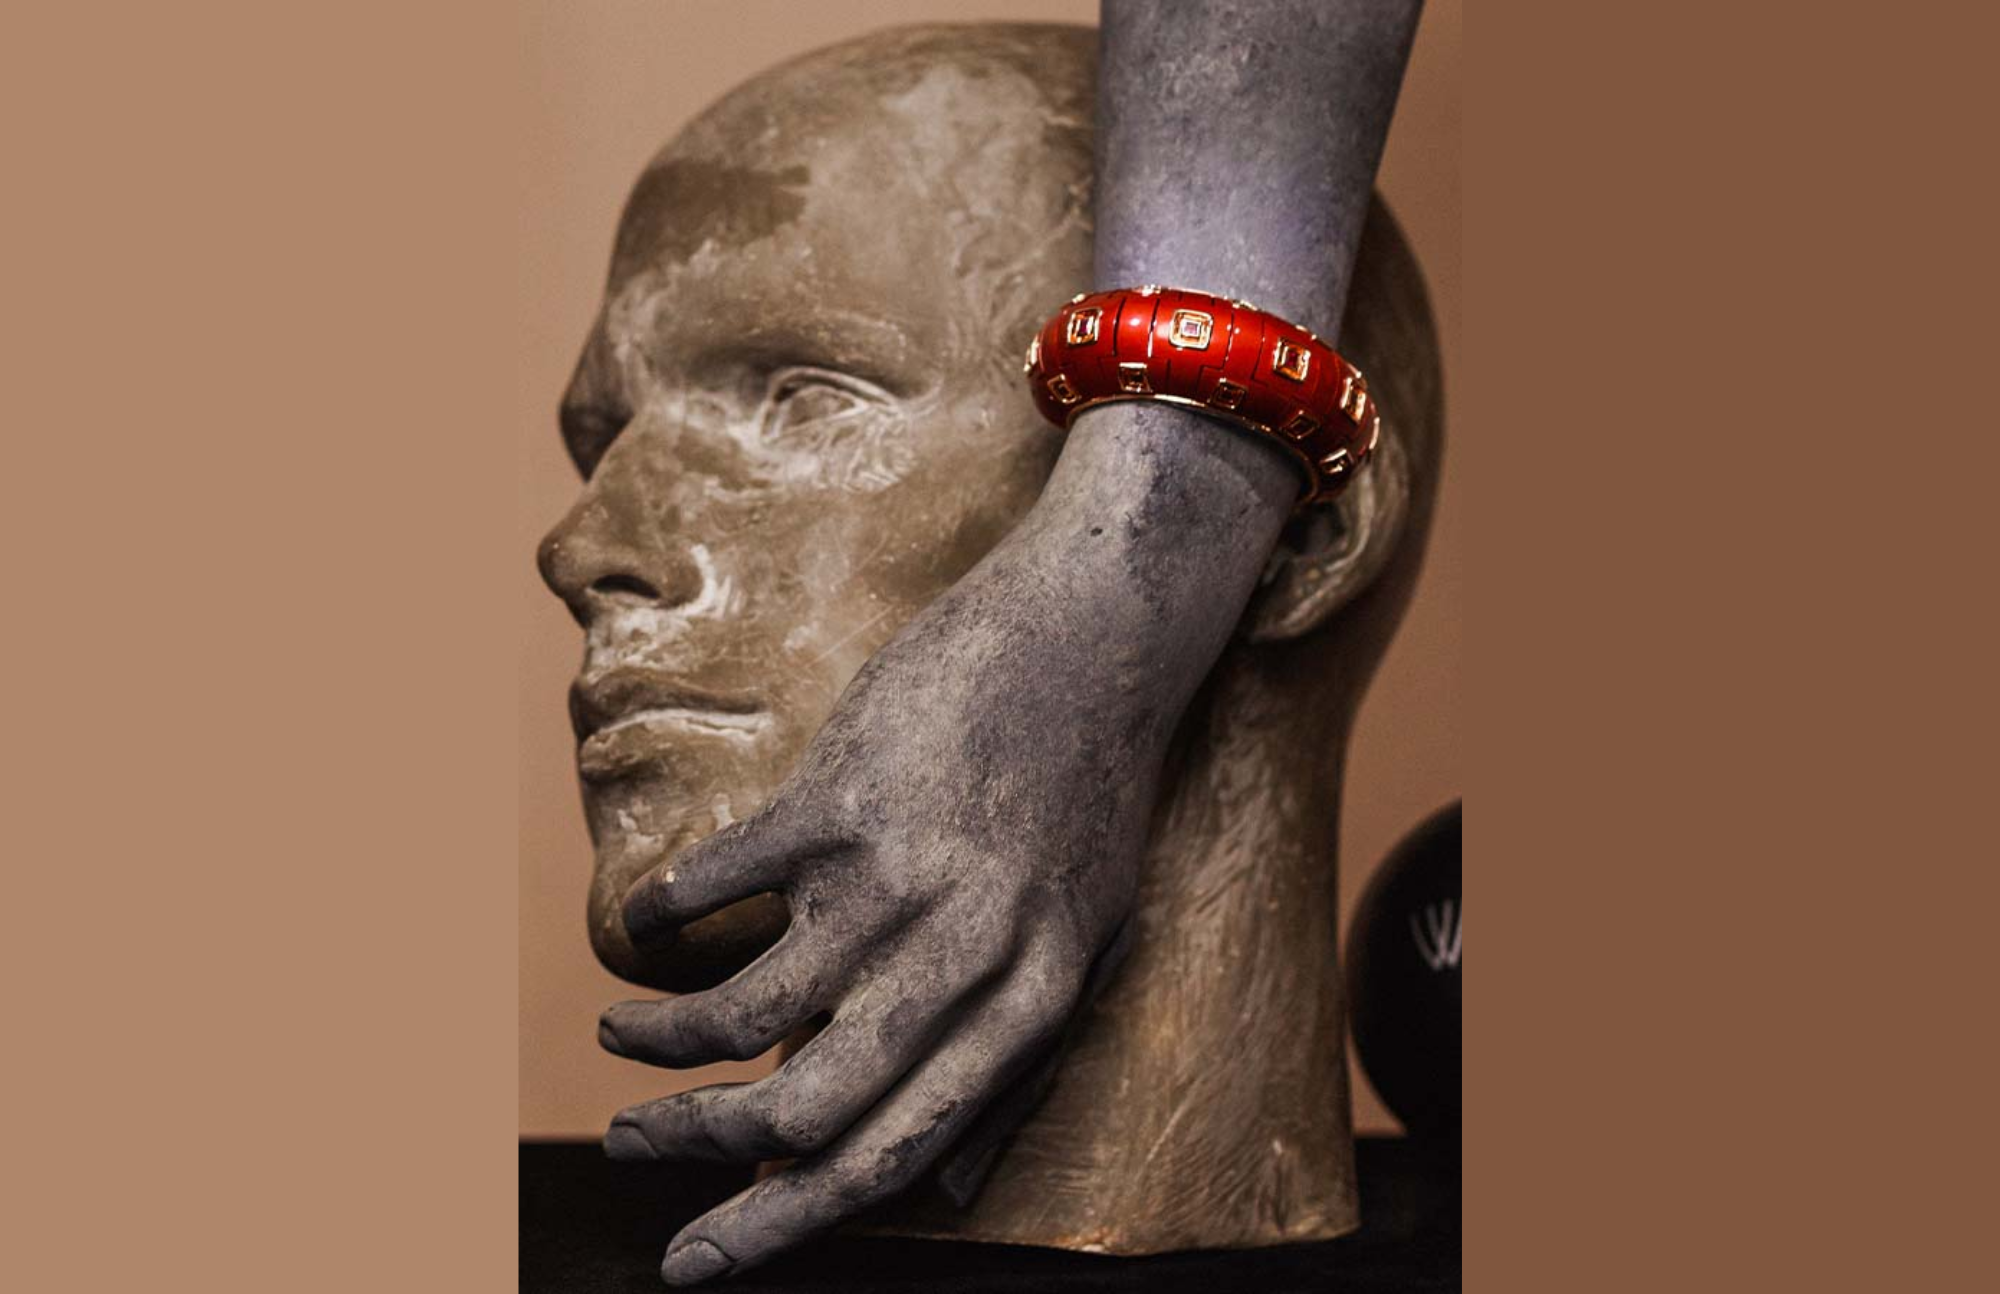 W. Rosado Tribu 18K rose gold bracelet with red nano ceramic detail and princess cut rubies